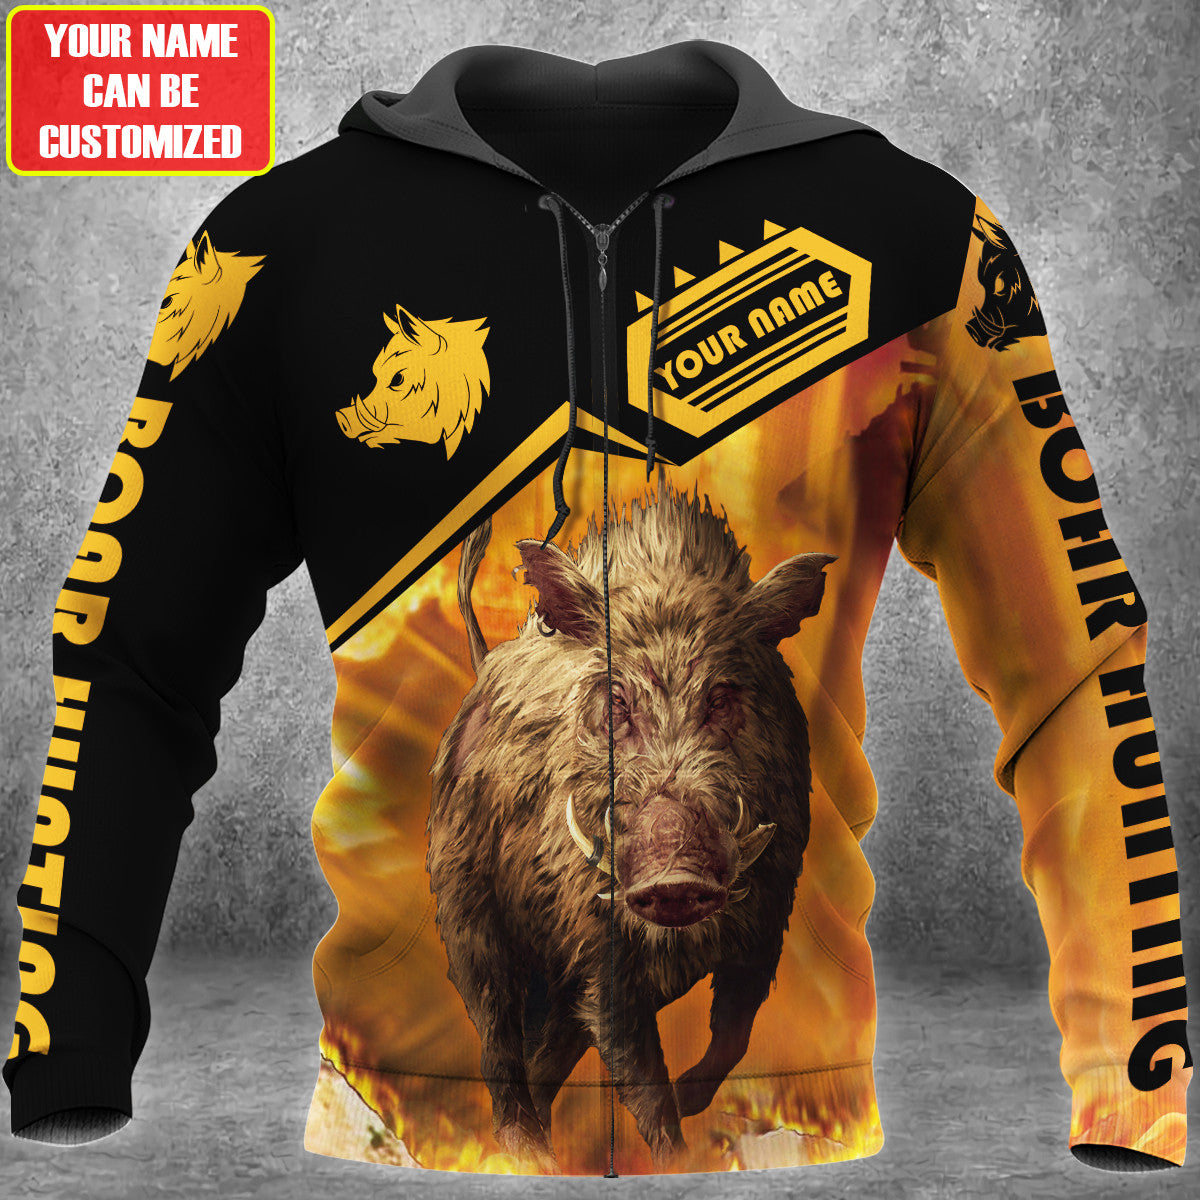 Customized Name Boar Hunting 3D Hoodie Shirt/ Boar Hunting Shirt for Men